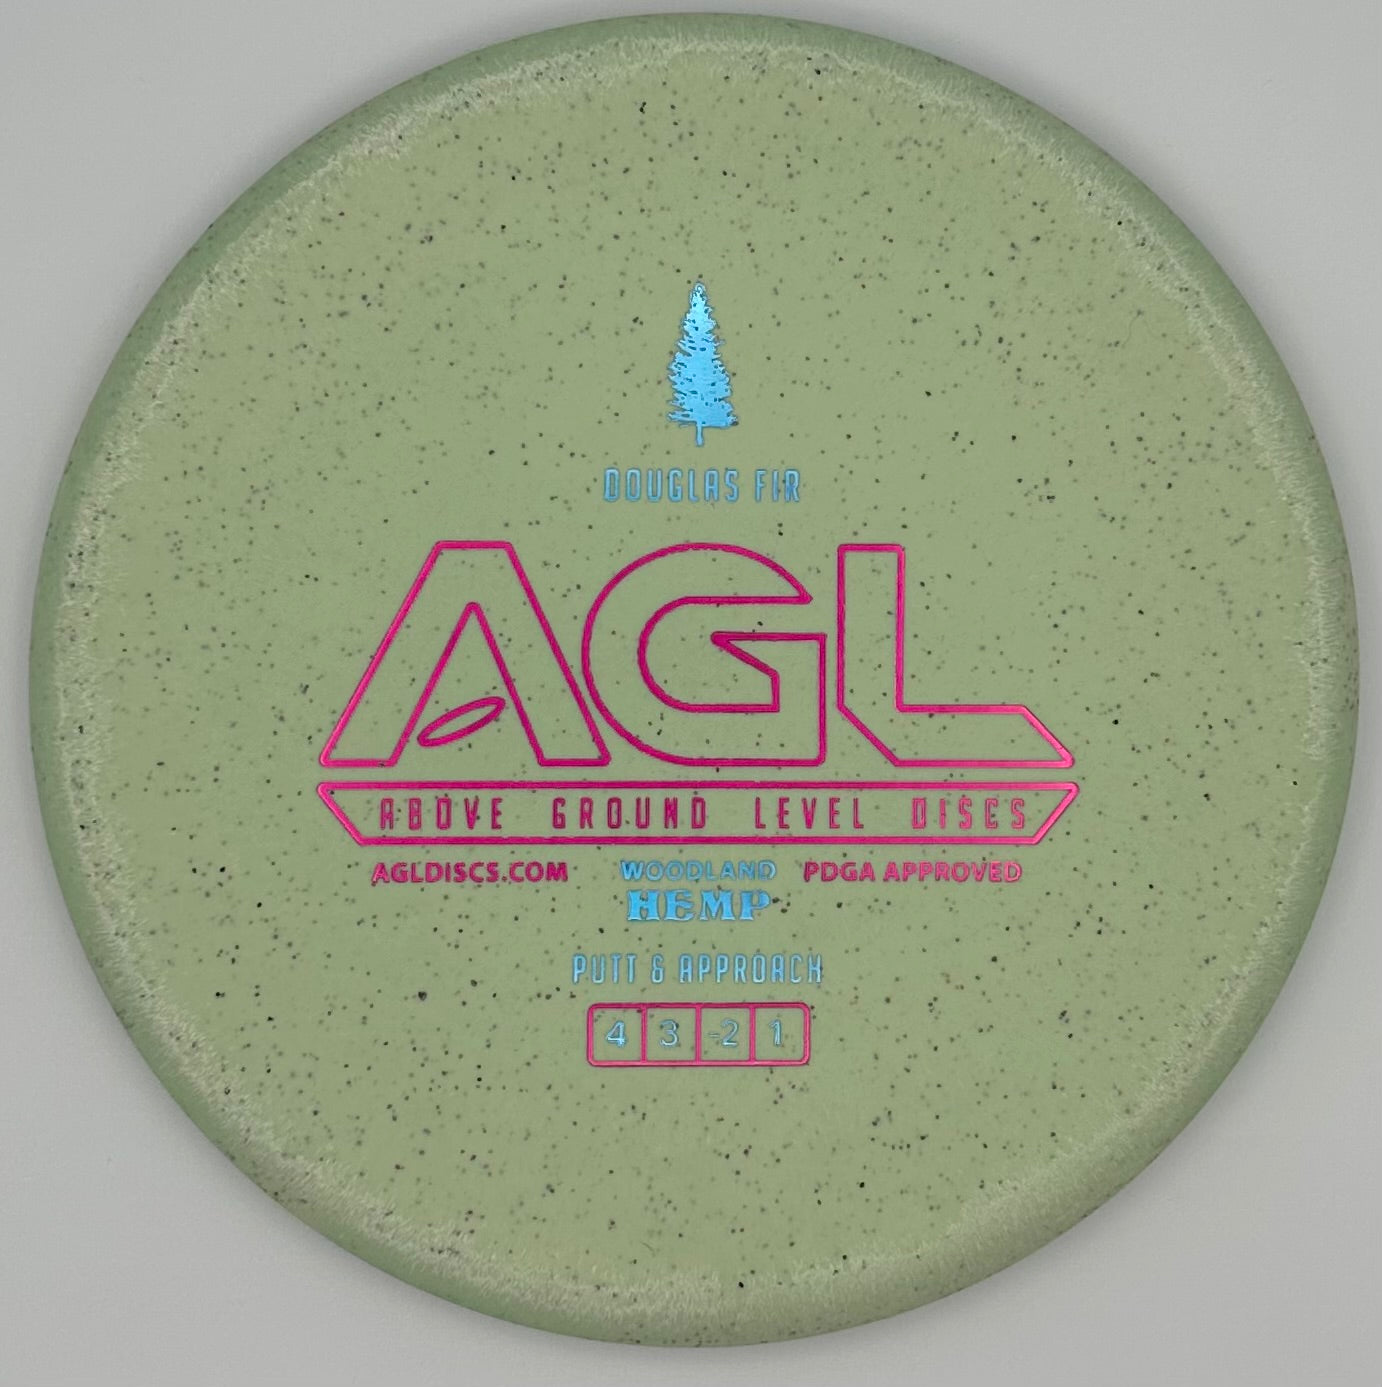 AGL Discs - Minty Green Woodland HEMP Douglas Fir (AGL Bar Stamp)